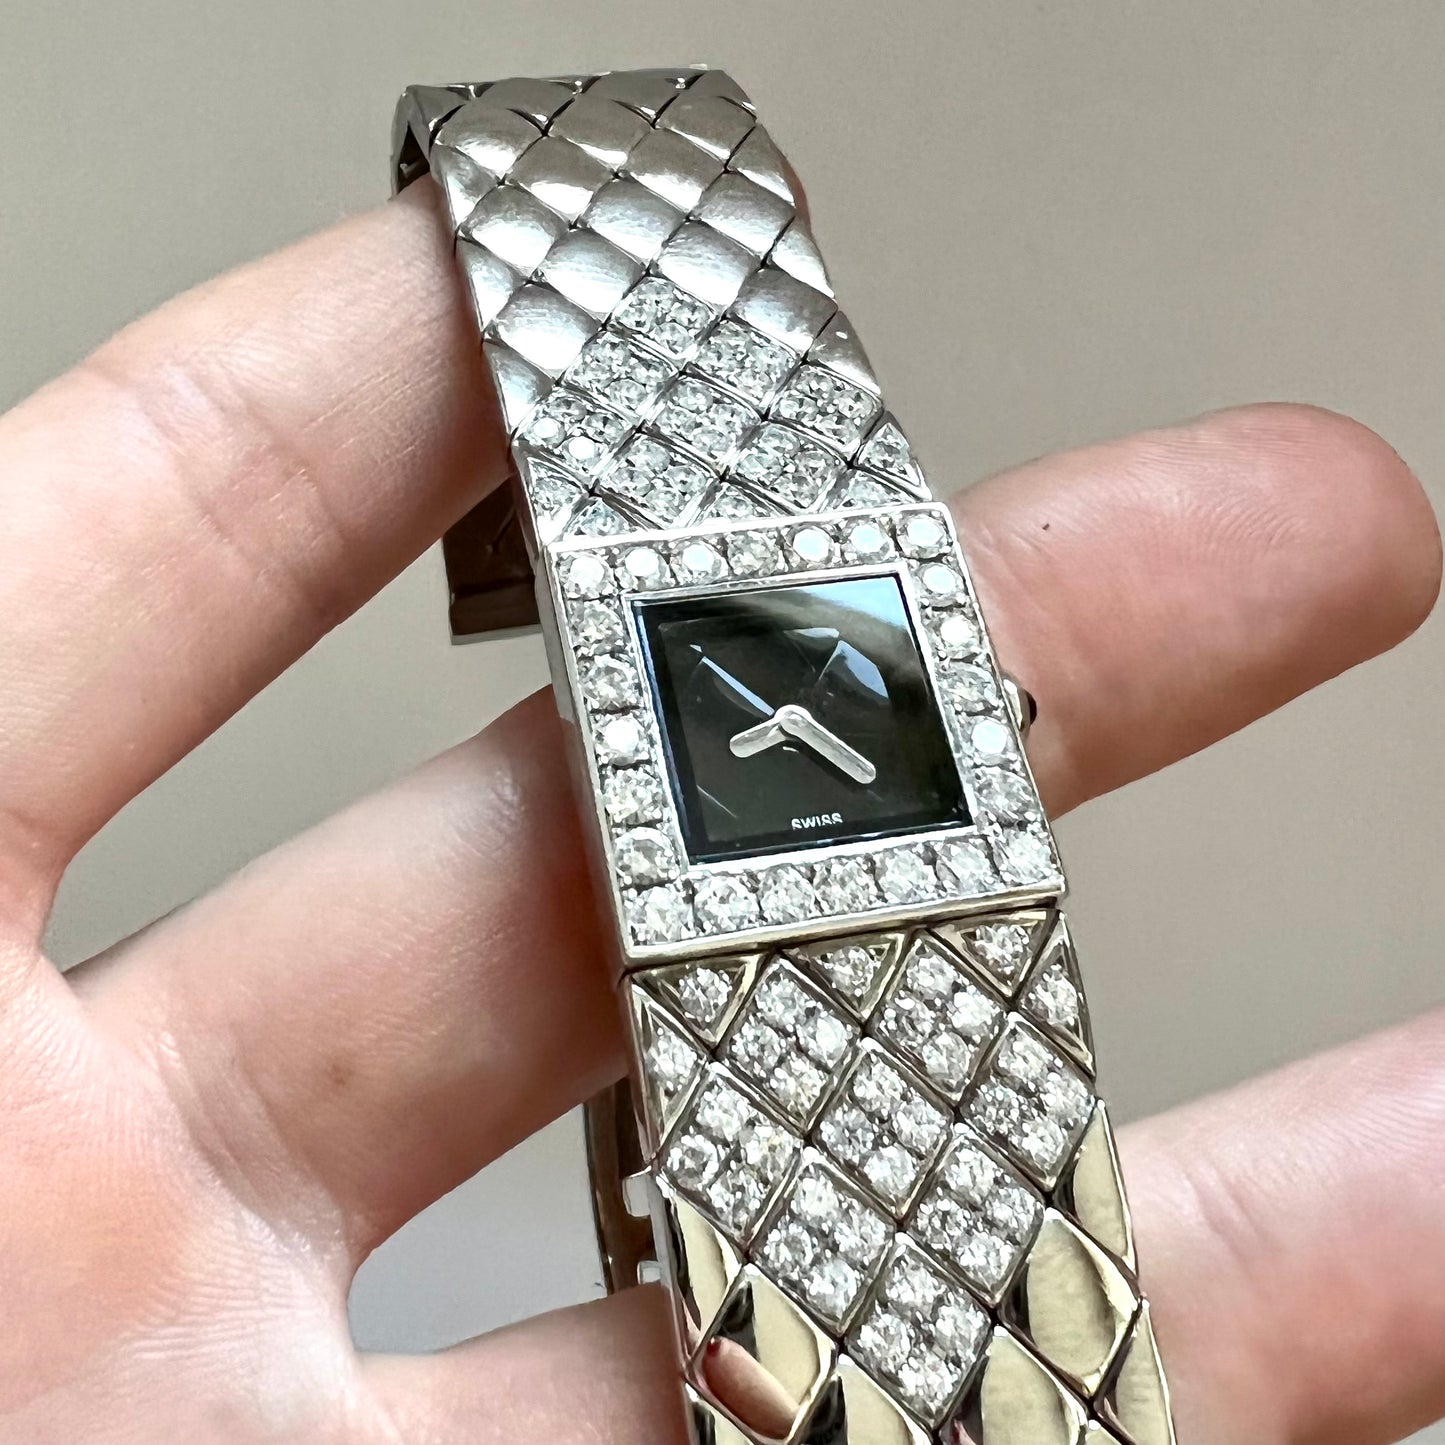 CHANEL MATELASSE Quartz 19mm Steel 3.03TCW Diamond Bracelet Watch